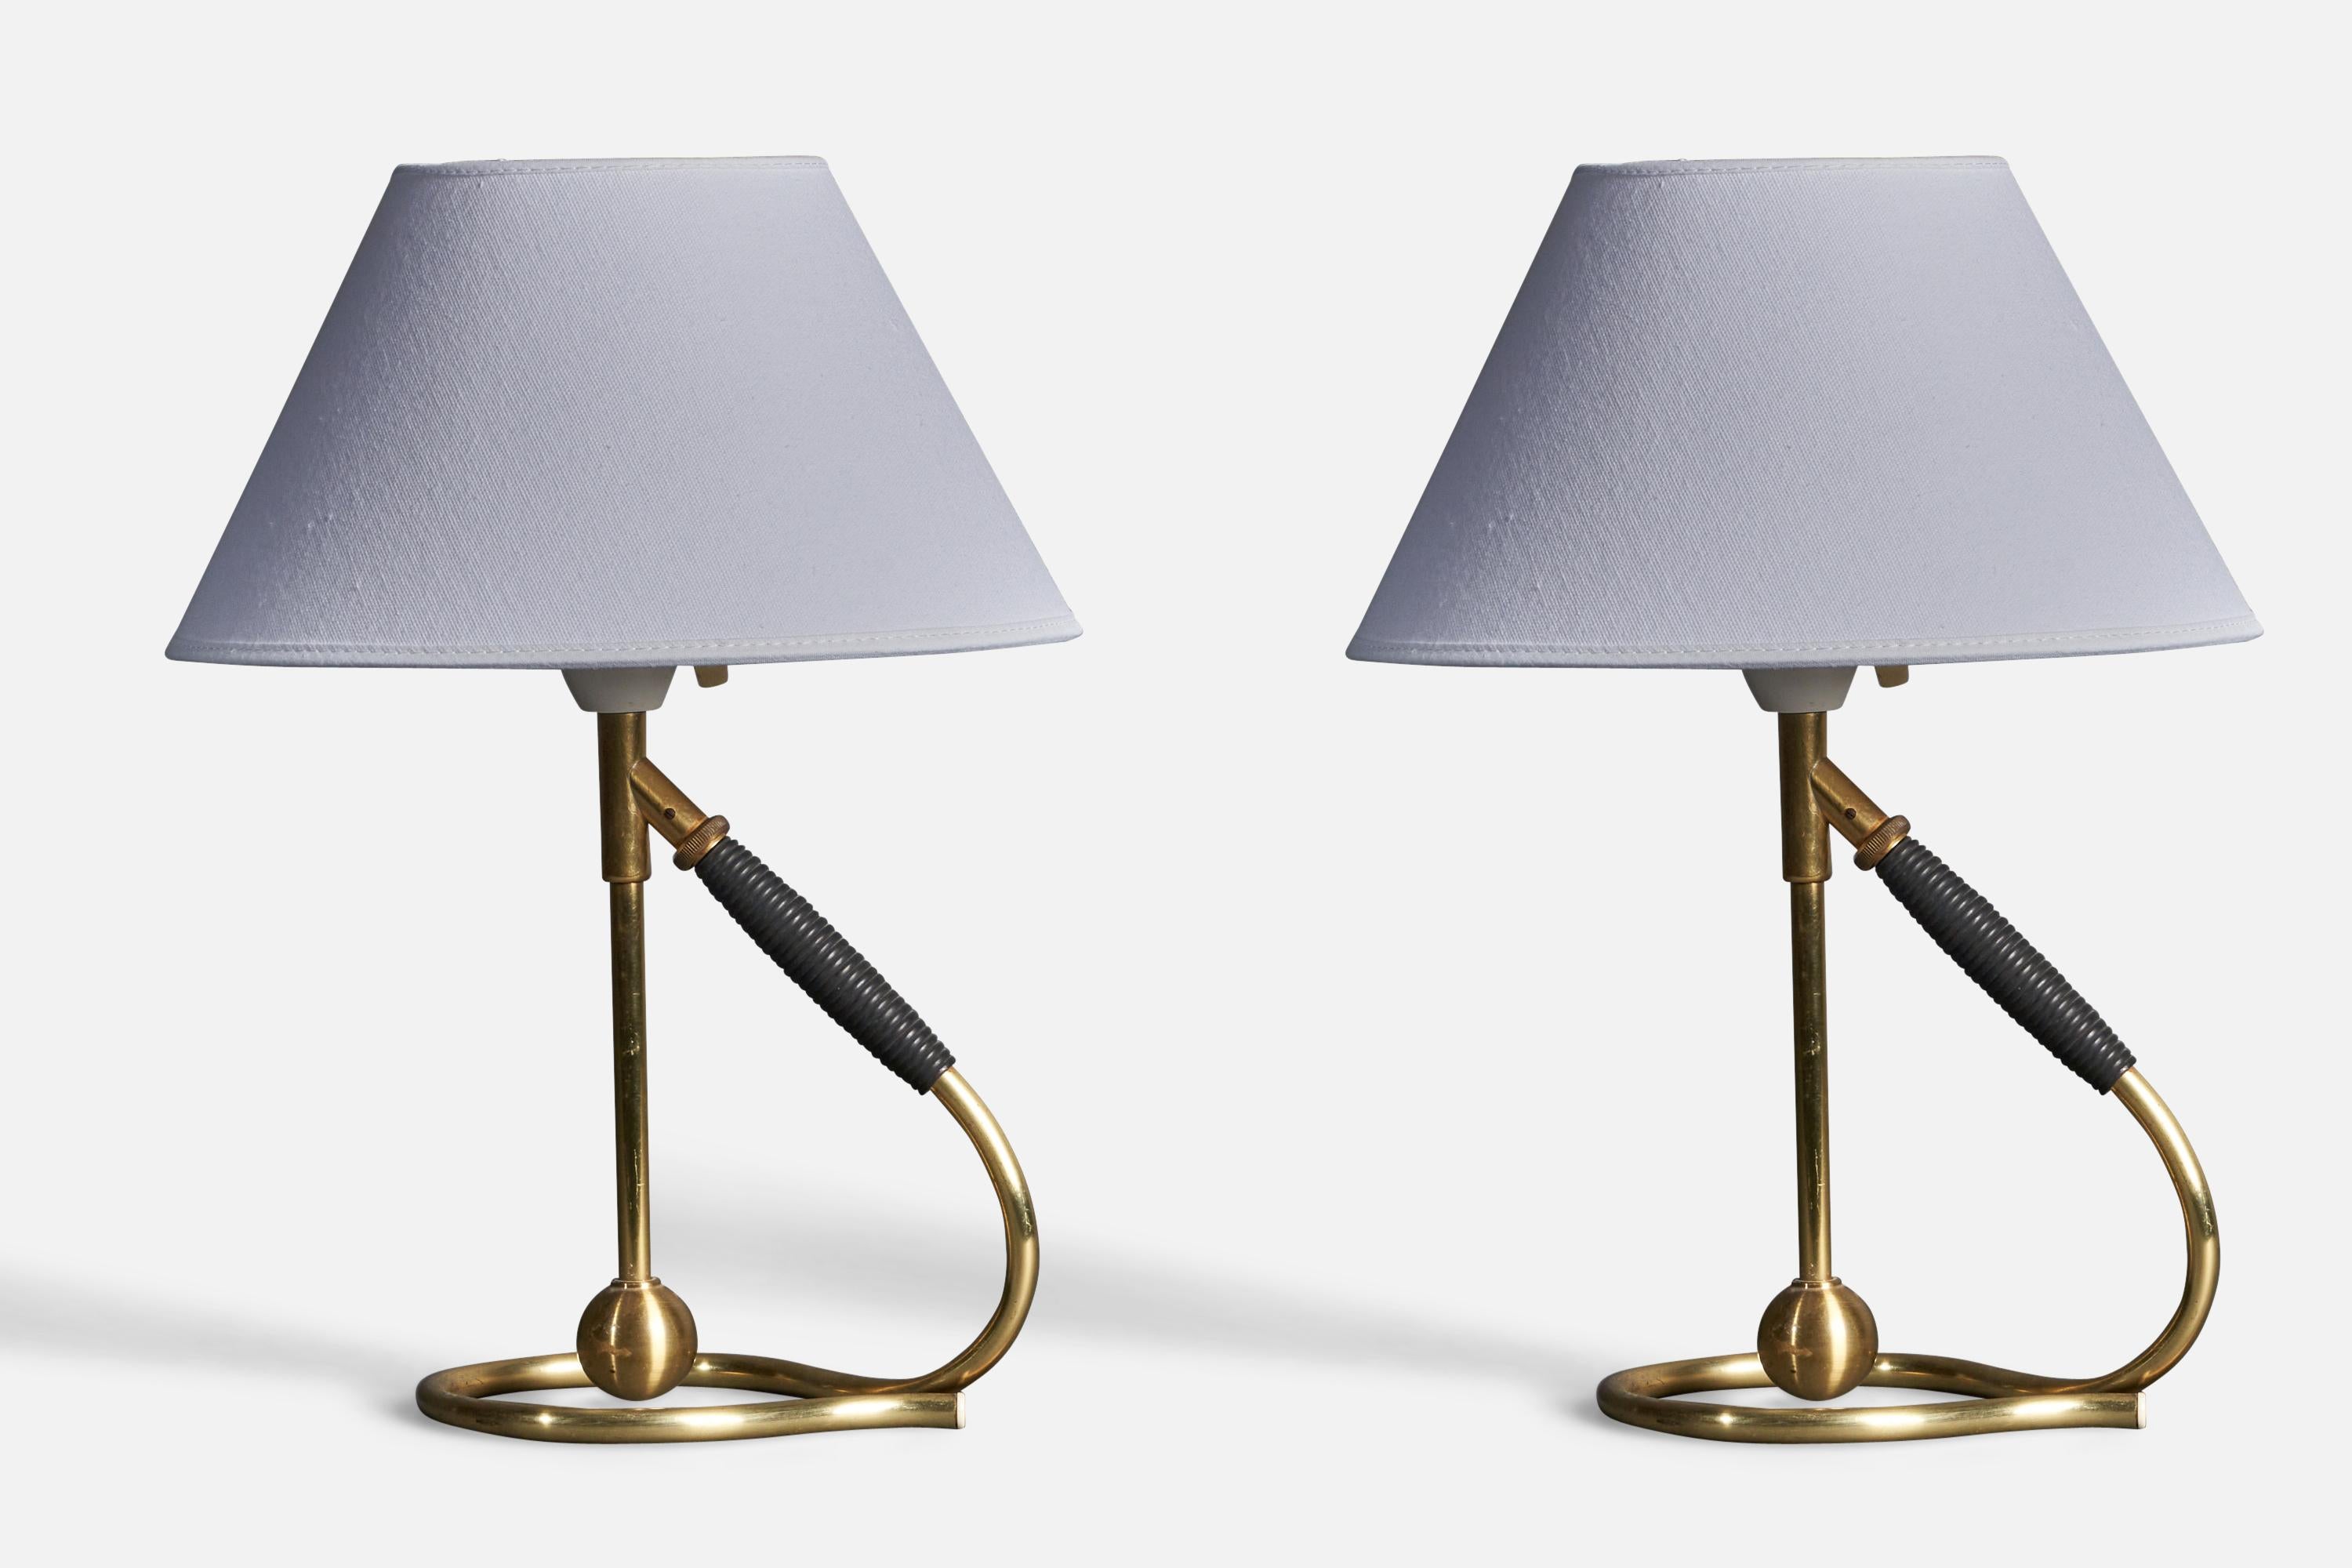 Danish Kaare Klint, Adjustable Modernist Table Lamps, Brass, Rubber, Denmark, 1950s For Sale